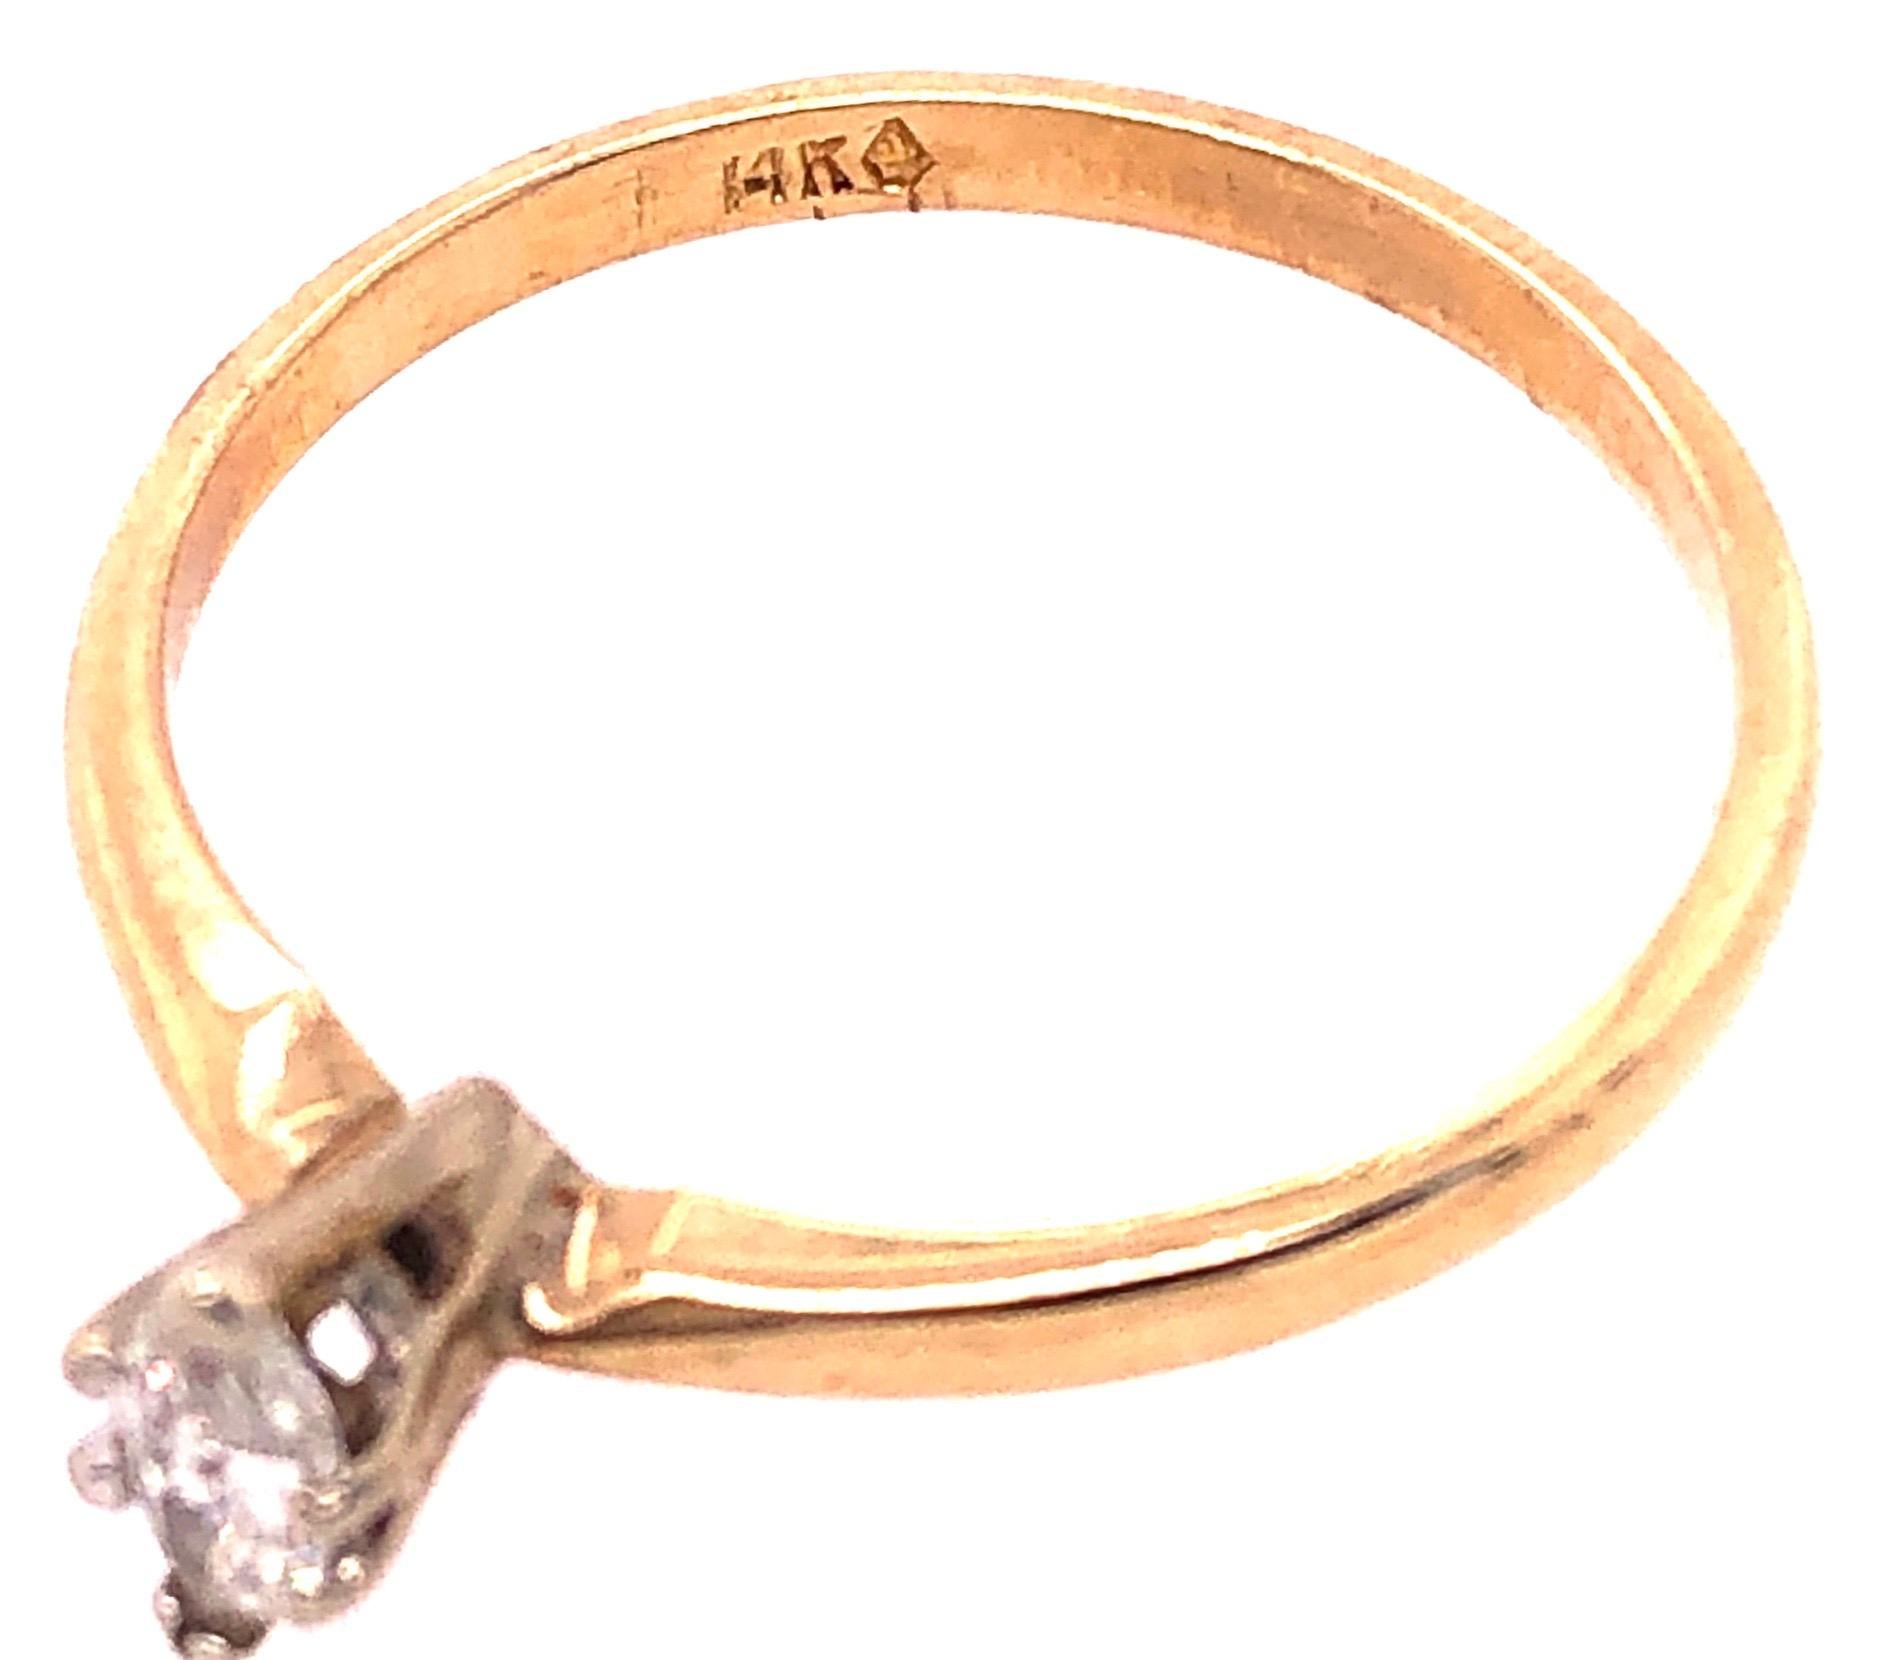 14 Karat Two Tone Gold Diamond Engagement Ring 0.15 Total Diamond Weight.
Size 8
2 grams total weight.